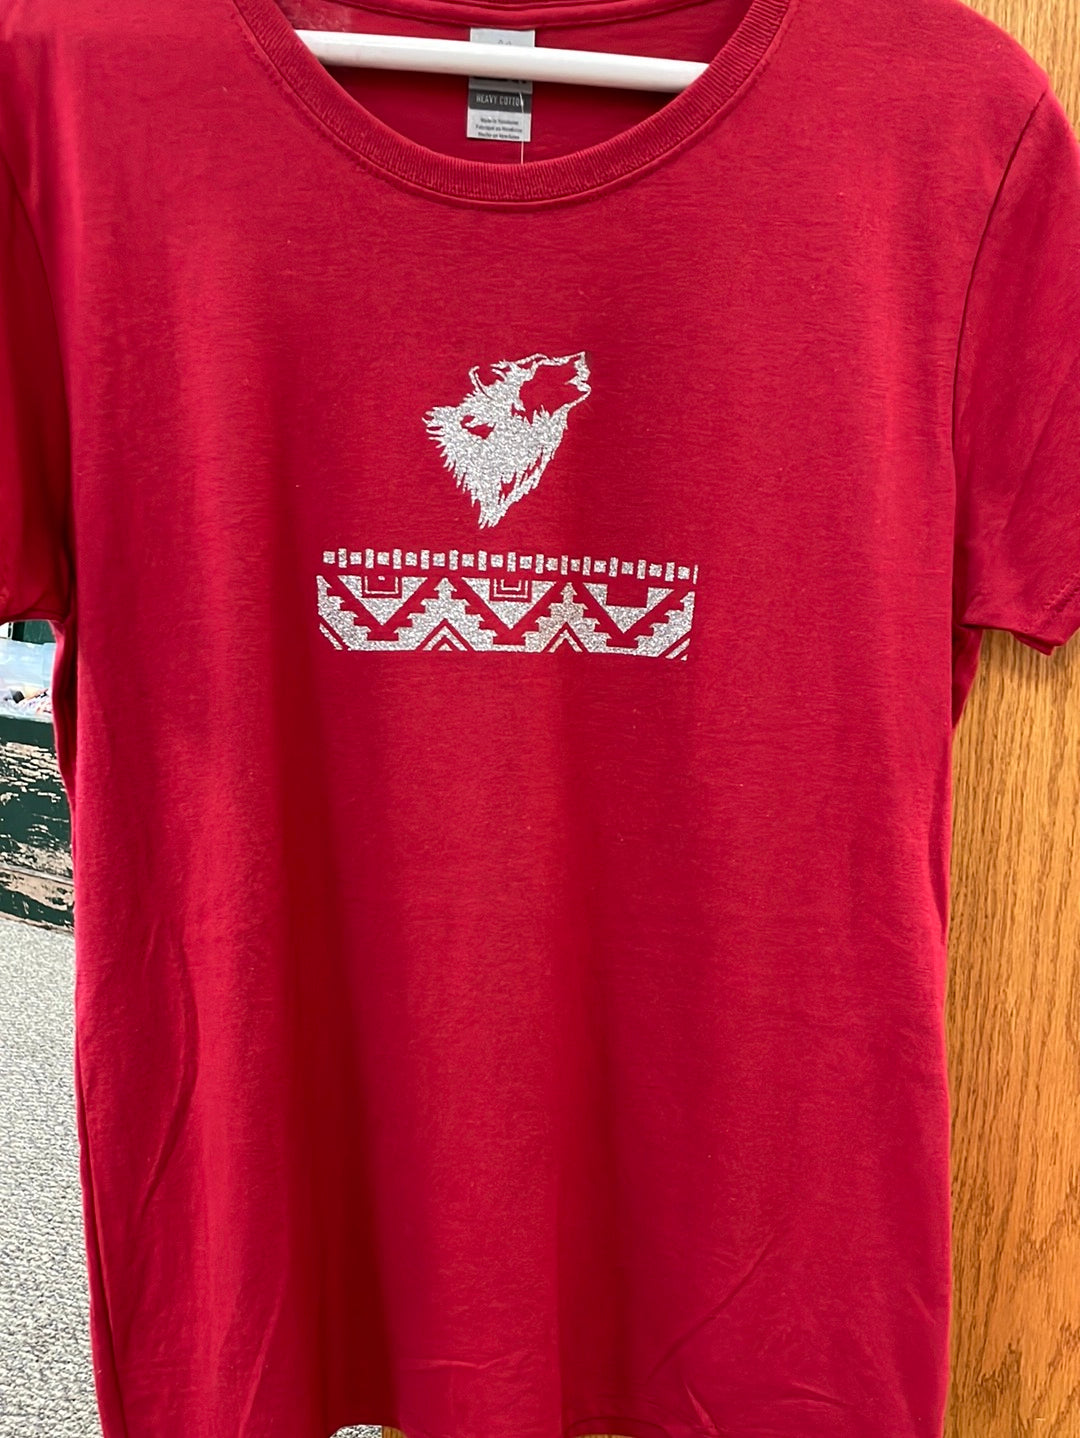 Native print shirts